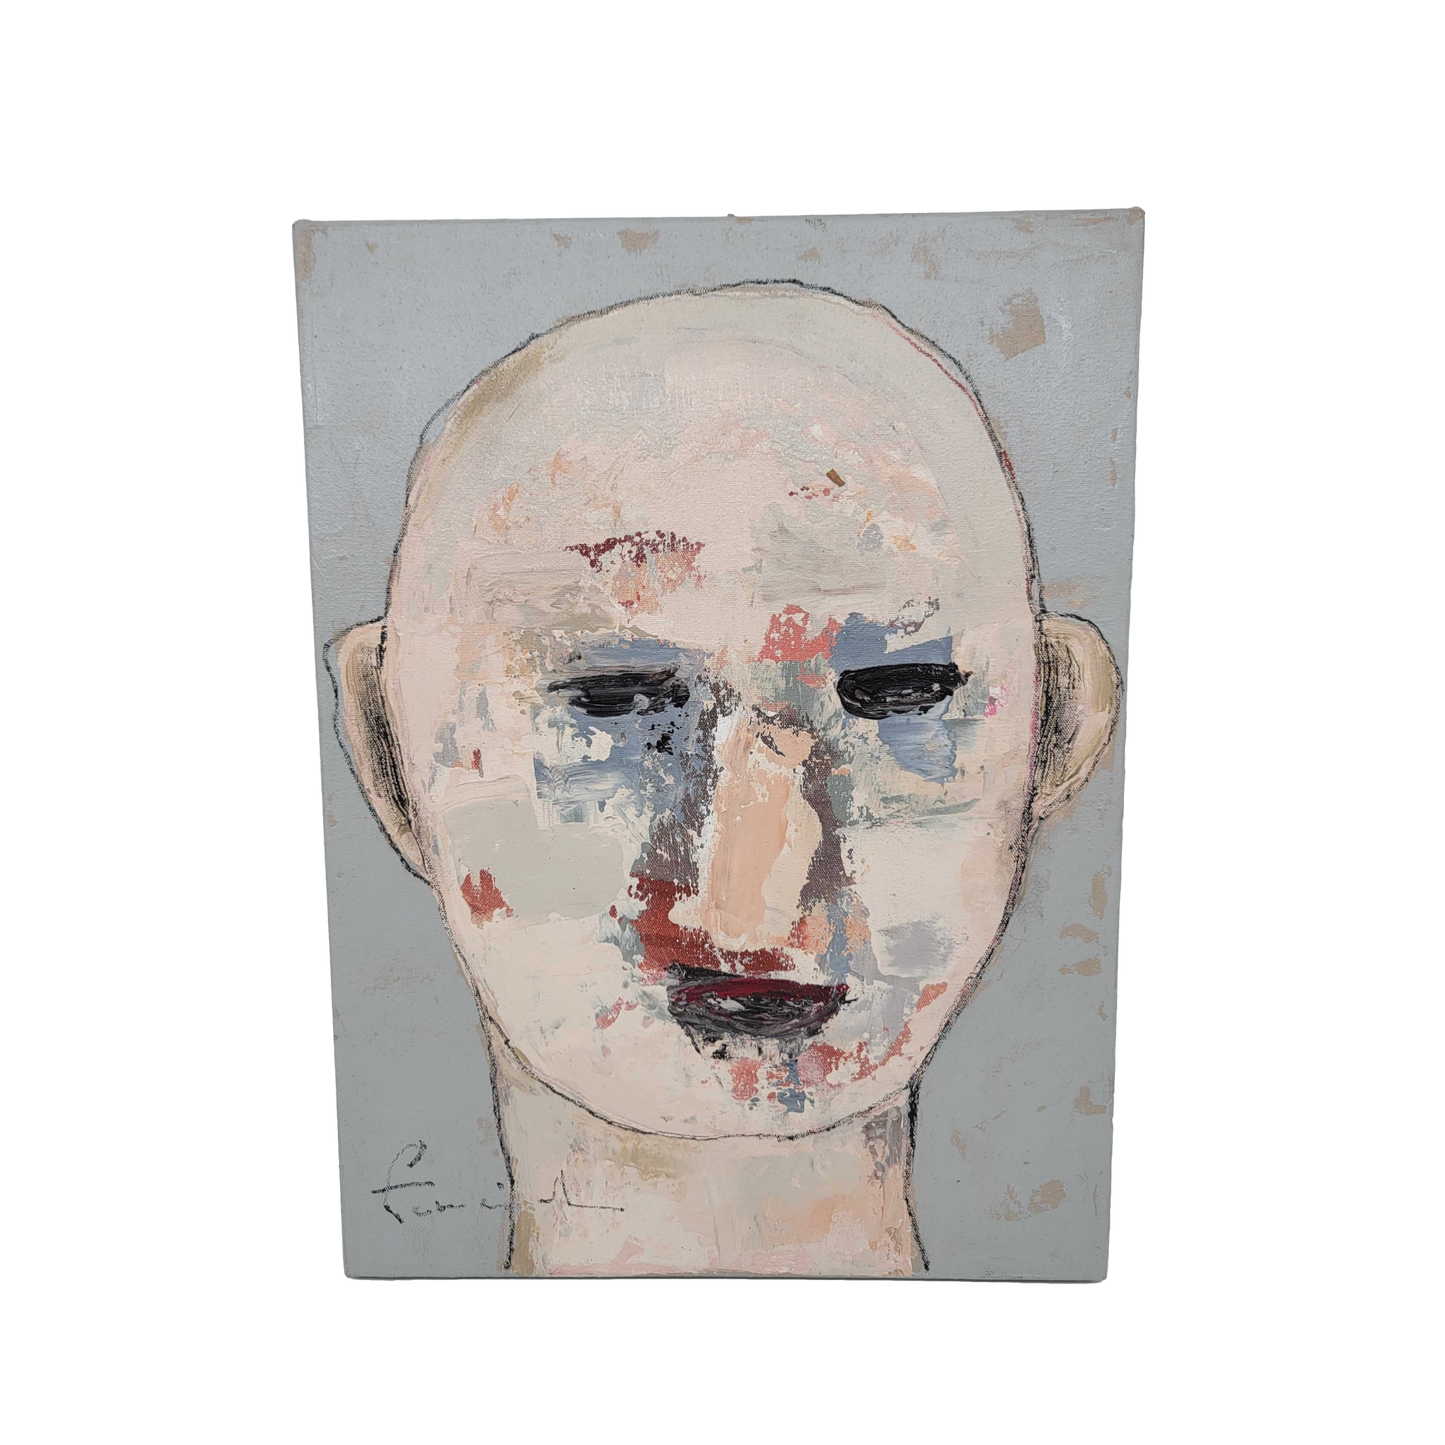 Portrait of Bald Man by Ari Prasetia